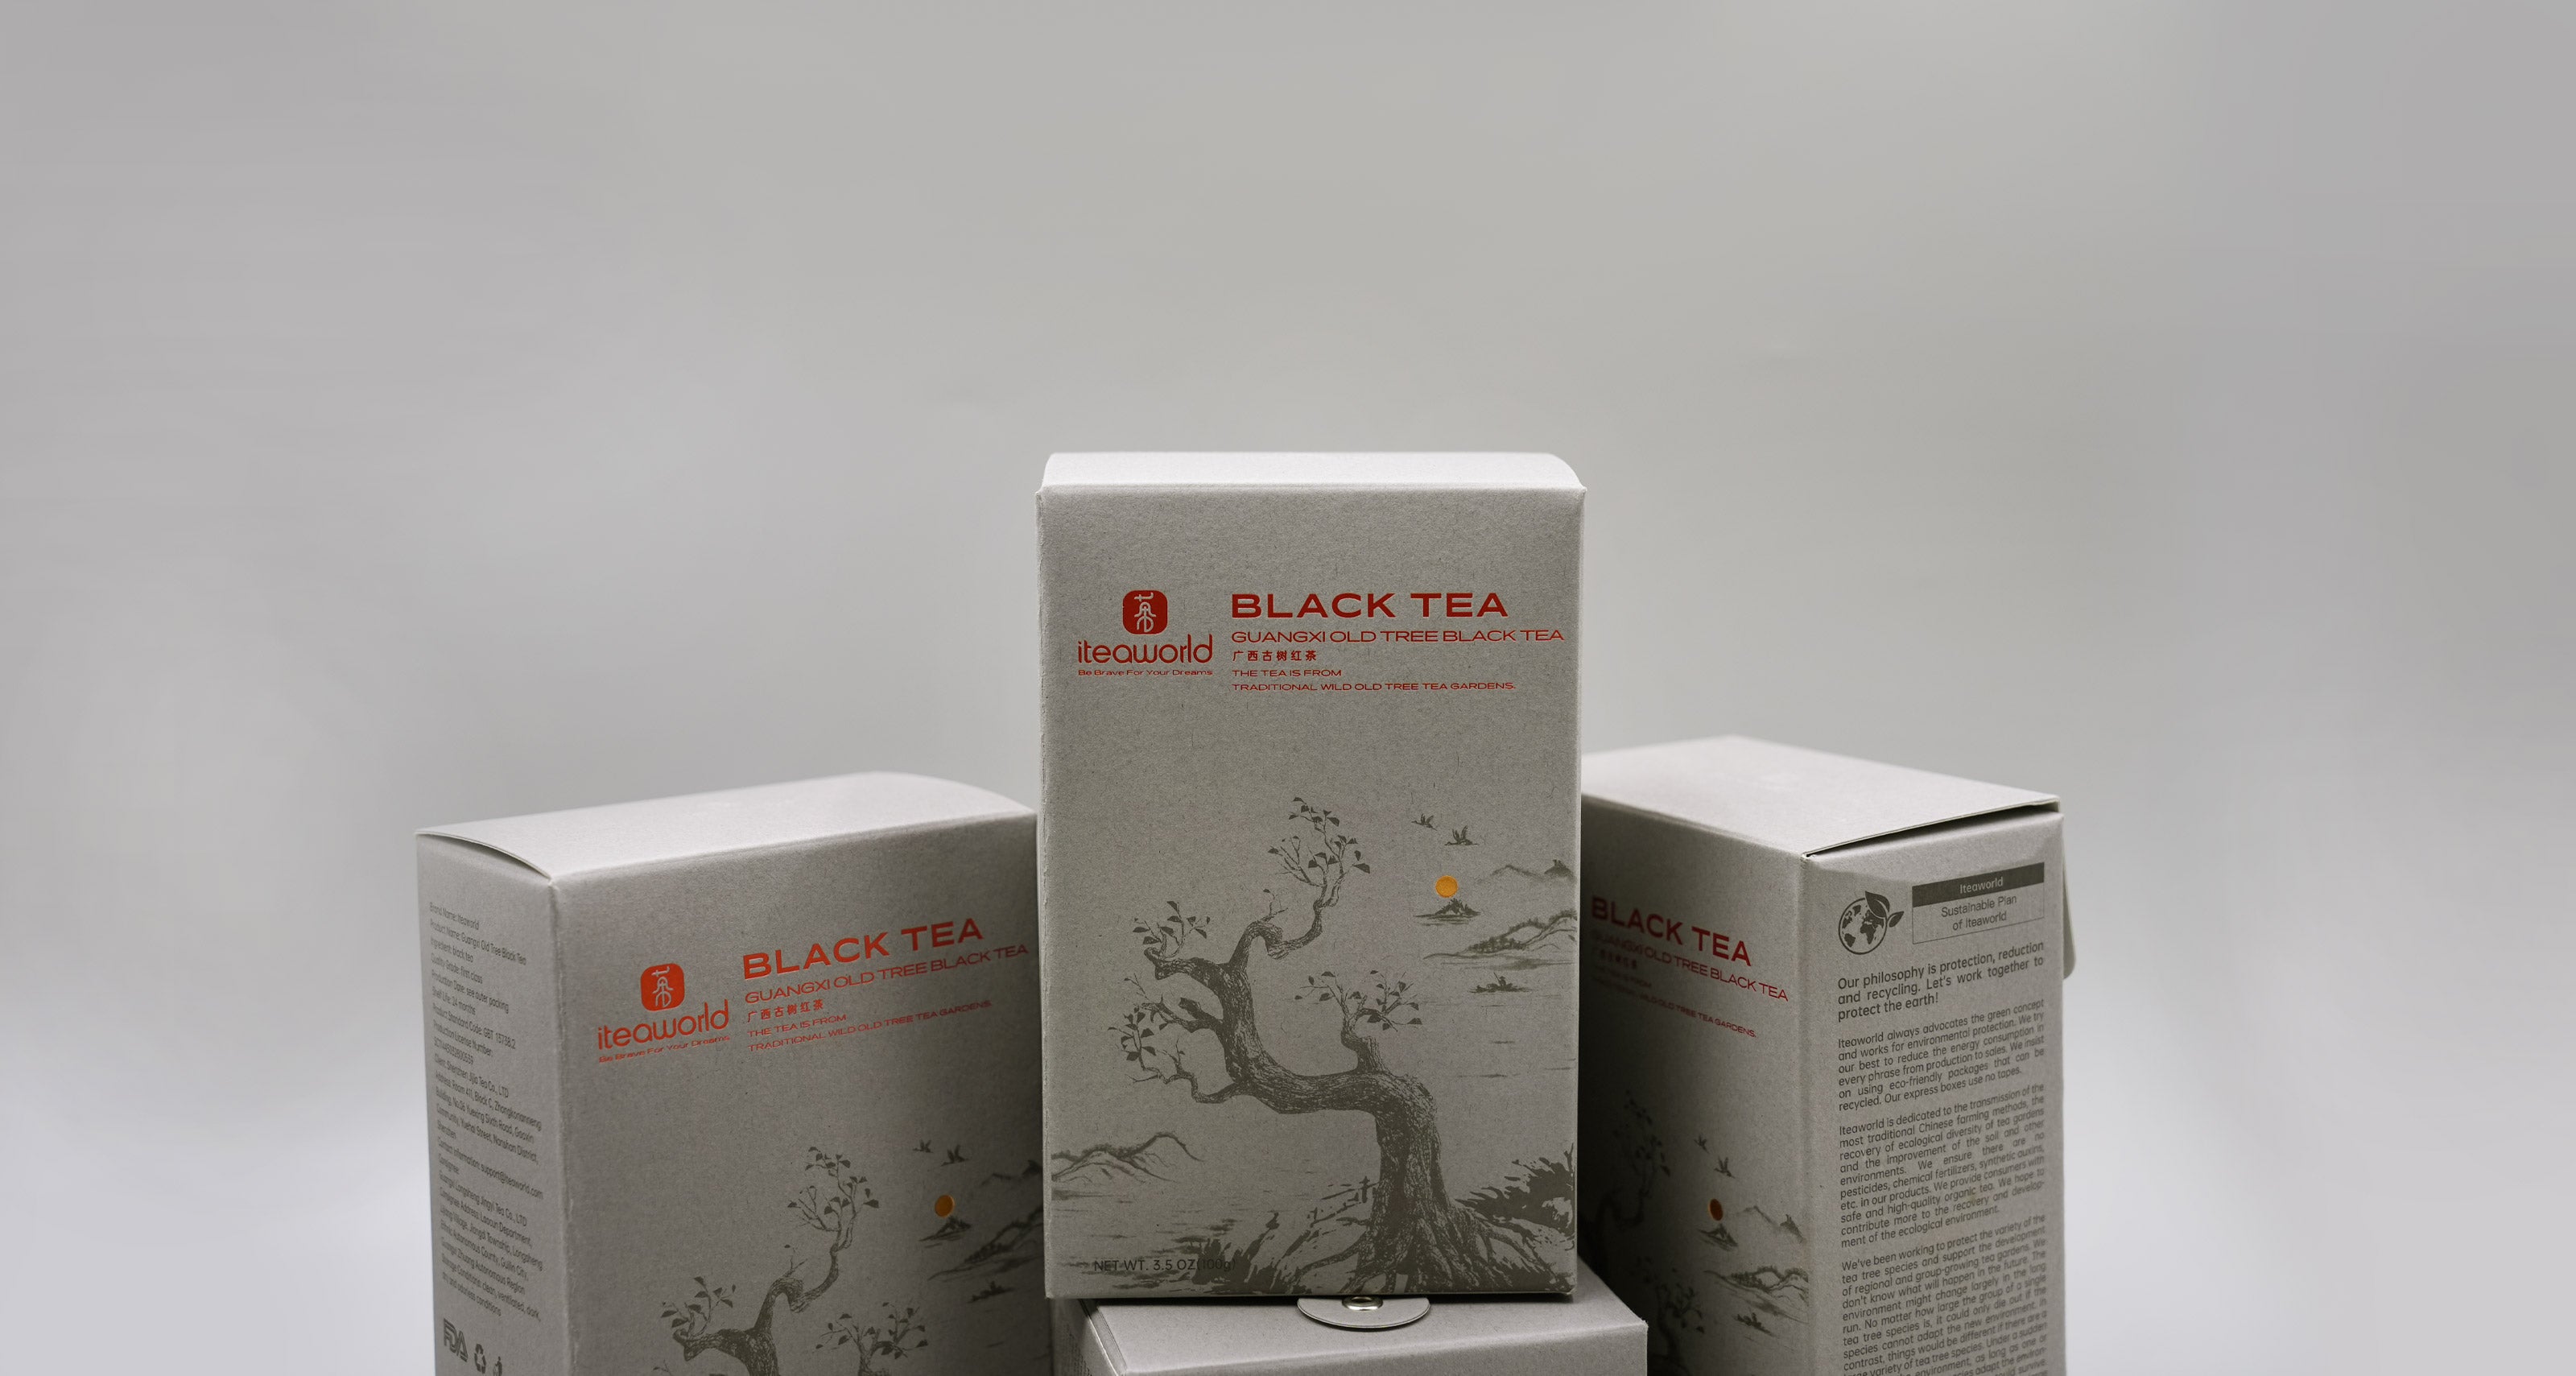 Guangx-old-tree-black-tea-gift